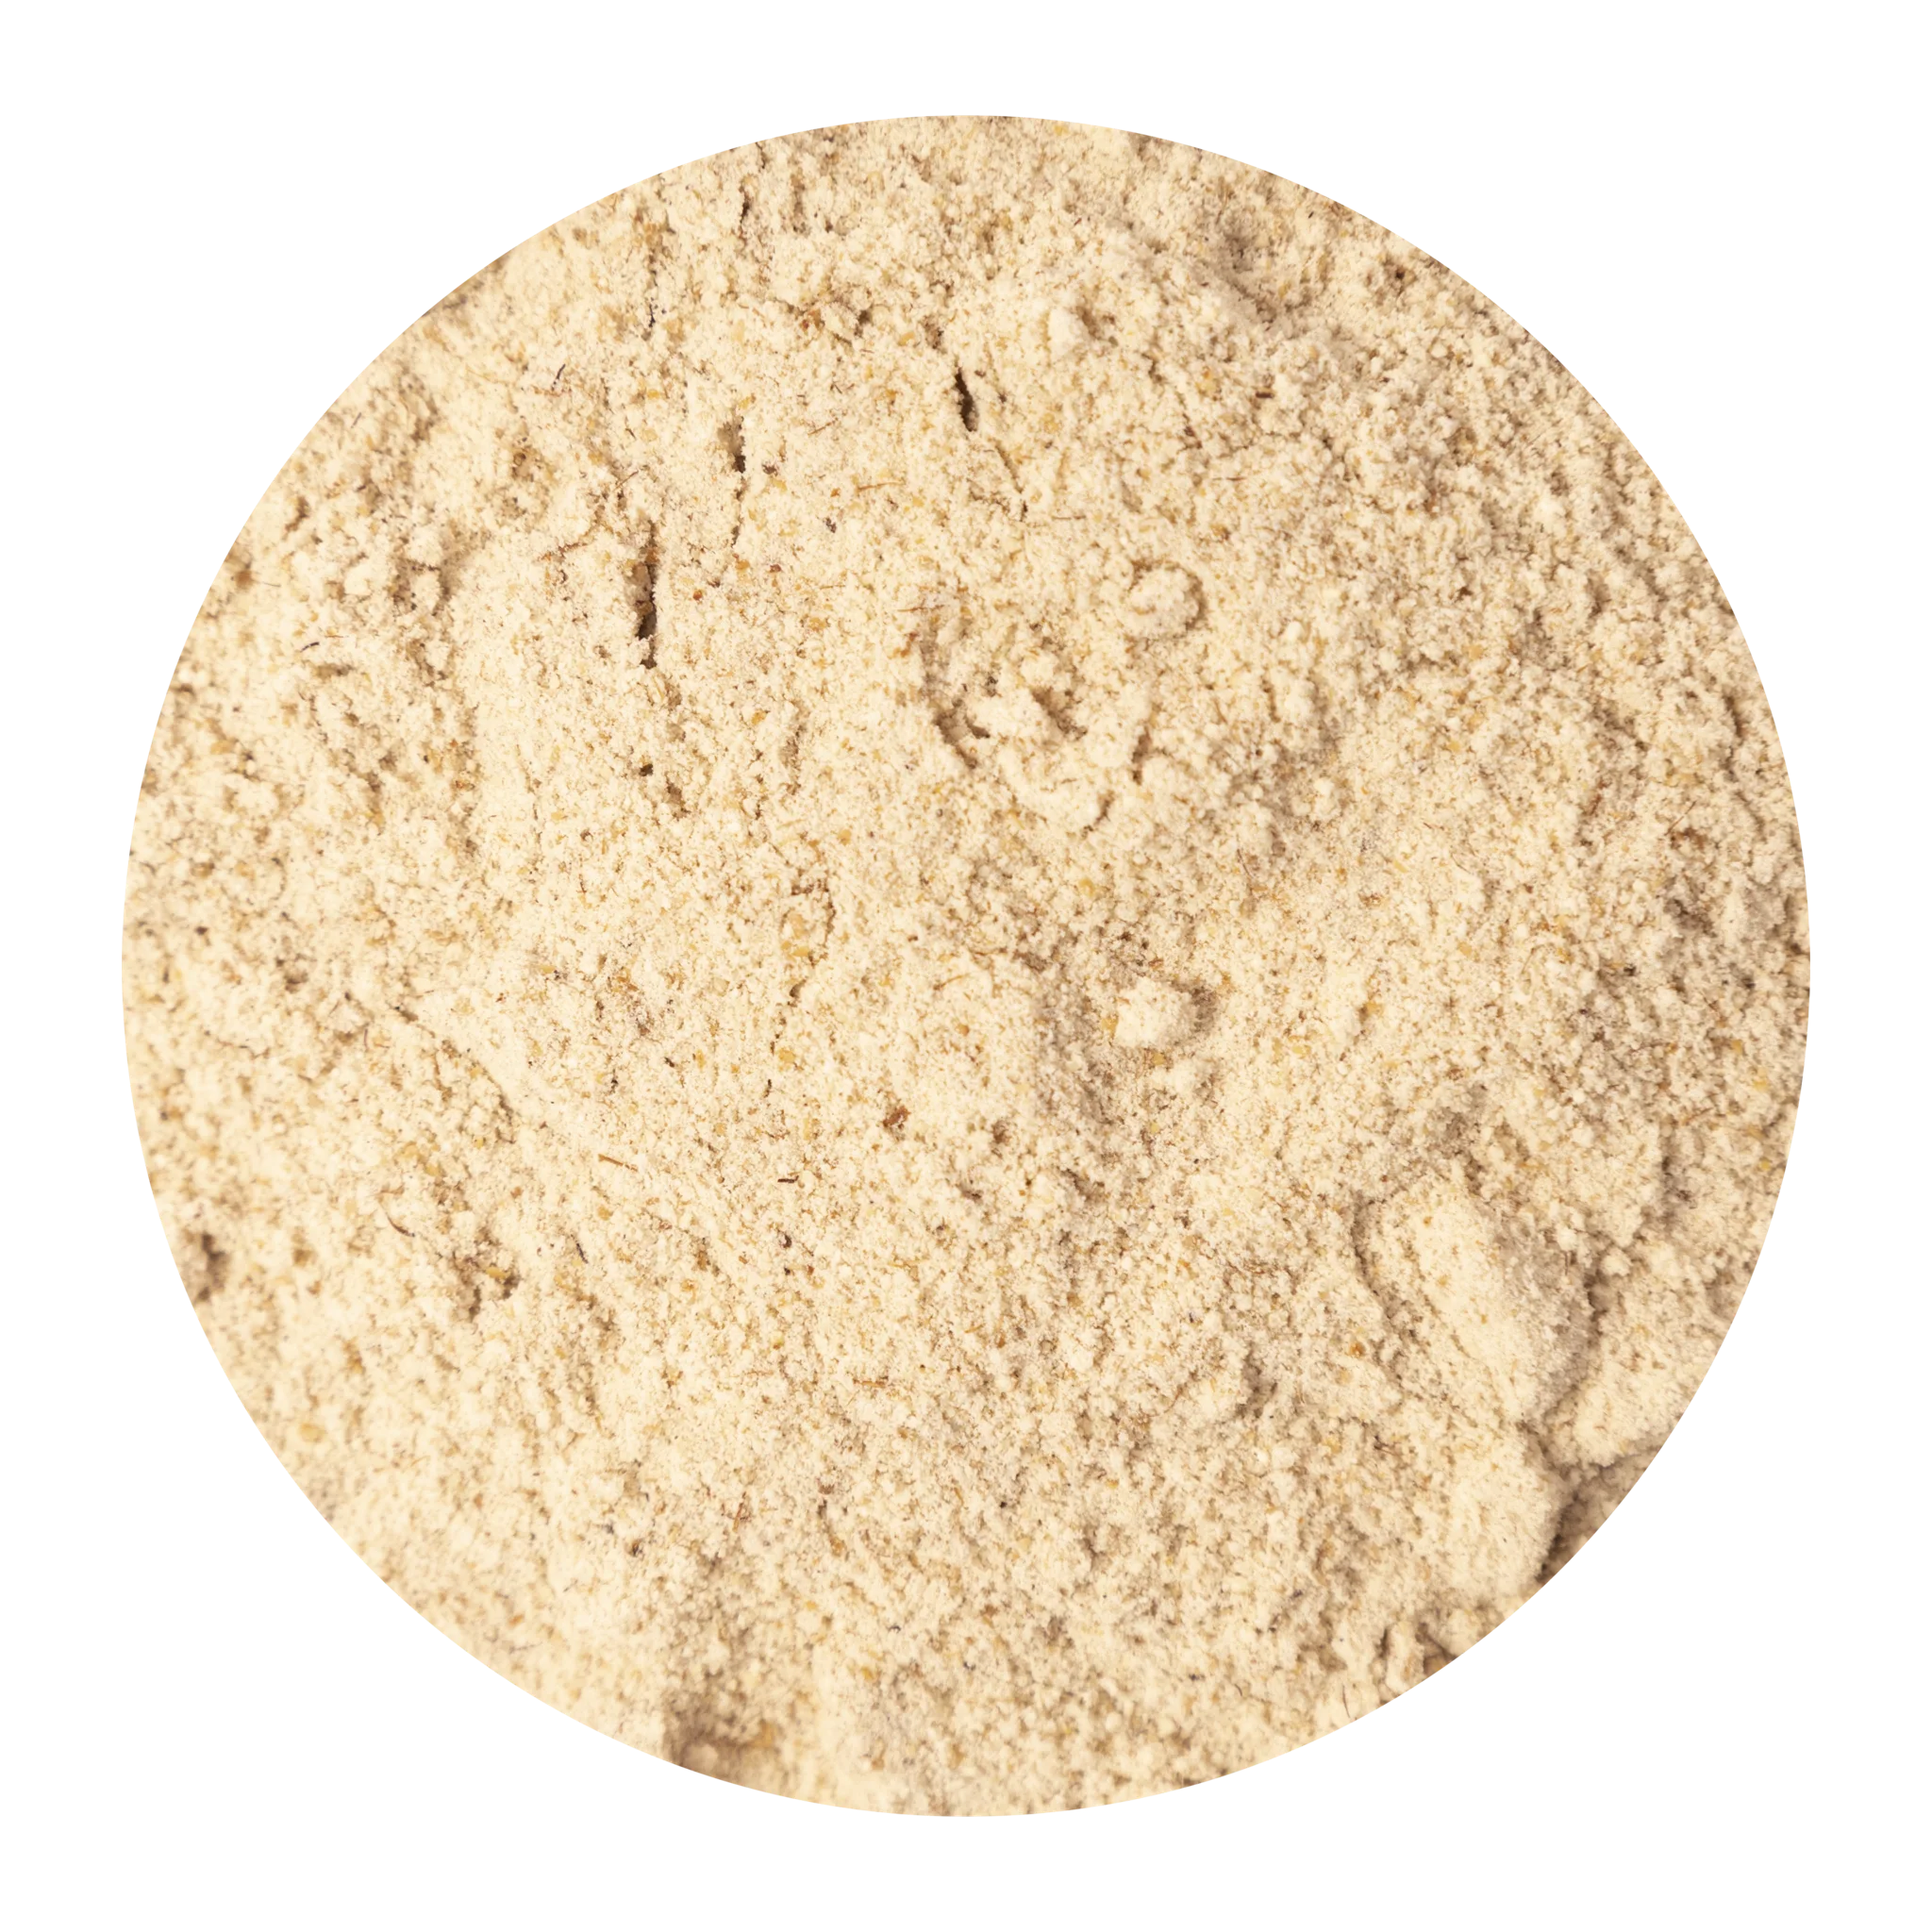 Tiger flour